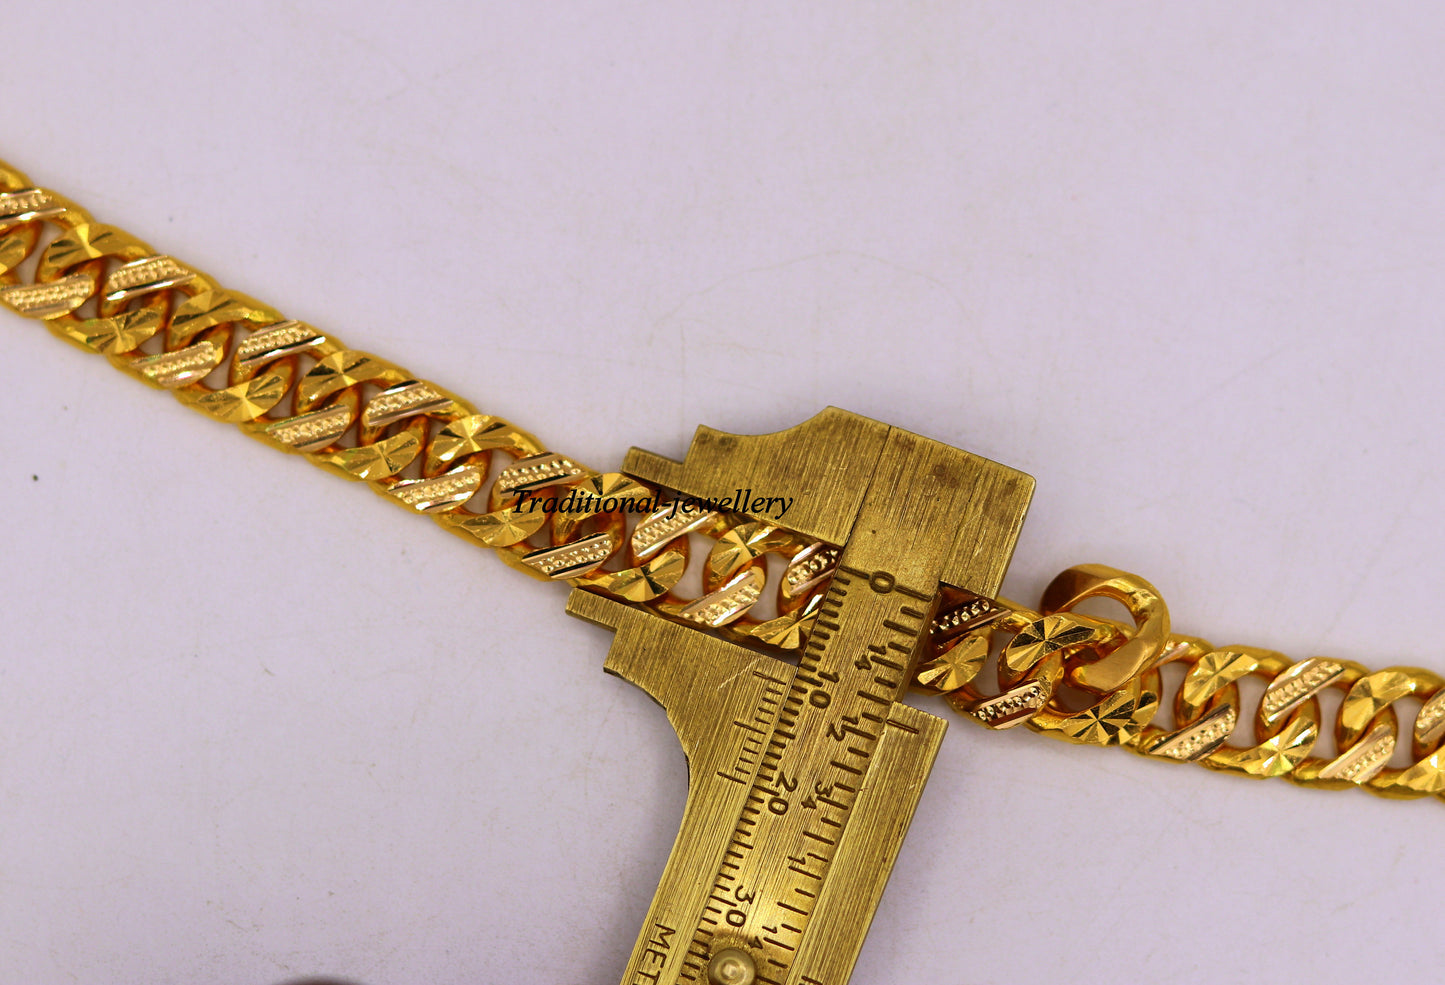 Authentic 22kt yellow gold handmade solid gold curb cuban link chain bracelet fabulous diamond cut design men's jewelry br21 - TRIBAL ORNAMENTS